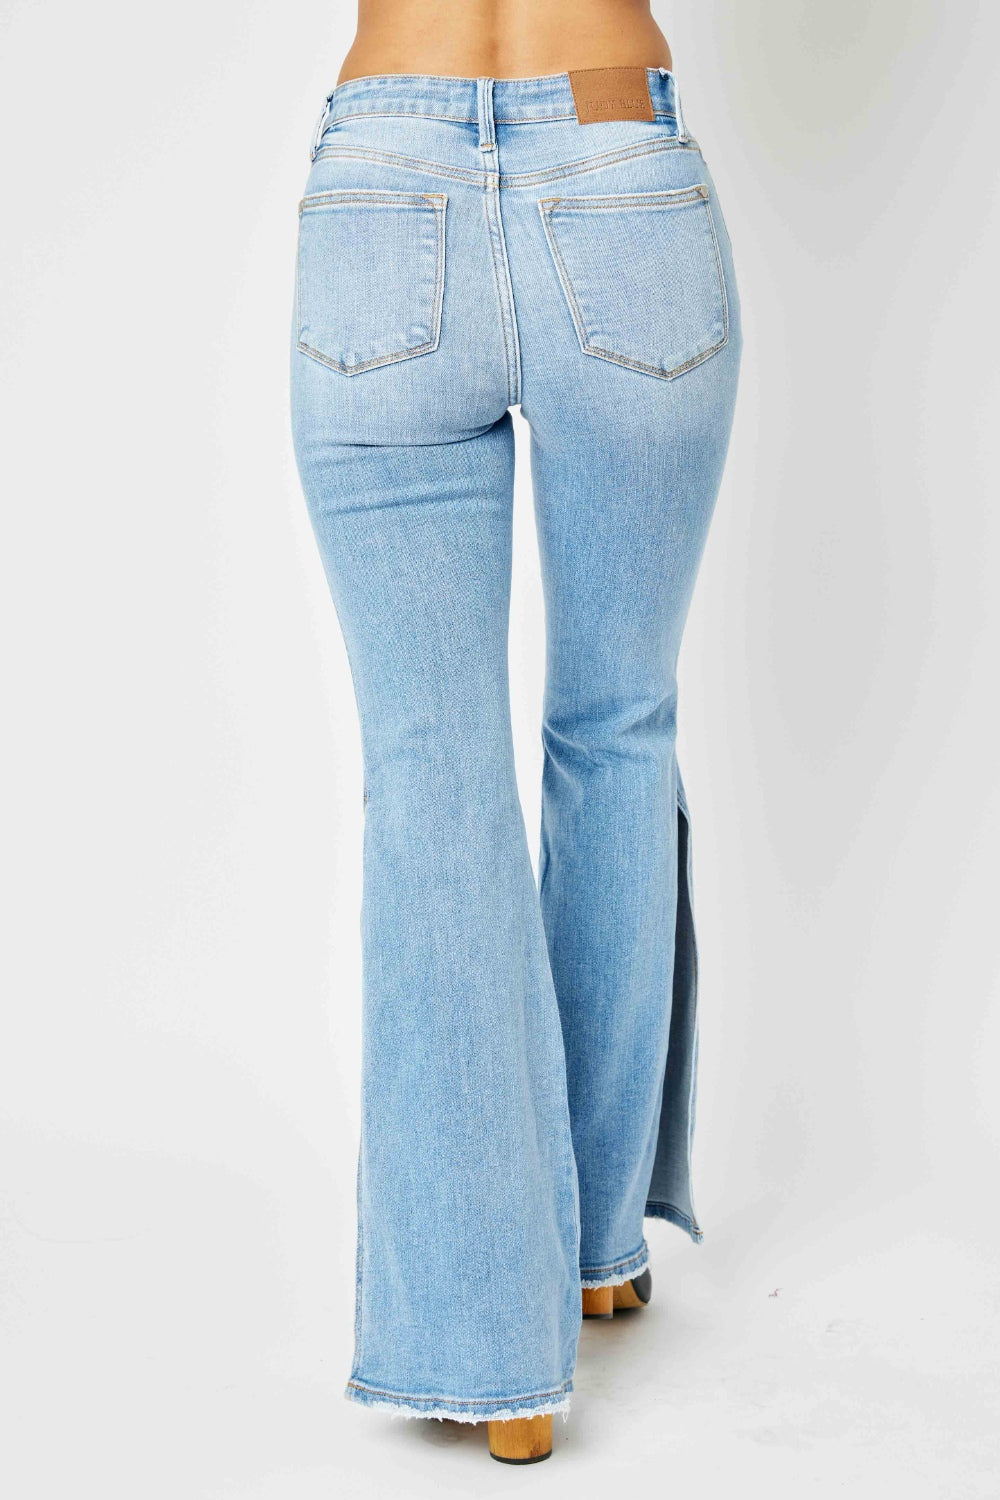 Judy Blue Full Size Mid Rise Raw Hem Slit Flare Jeans Bottom wear